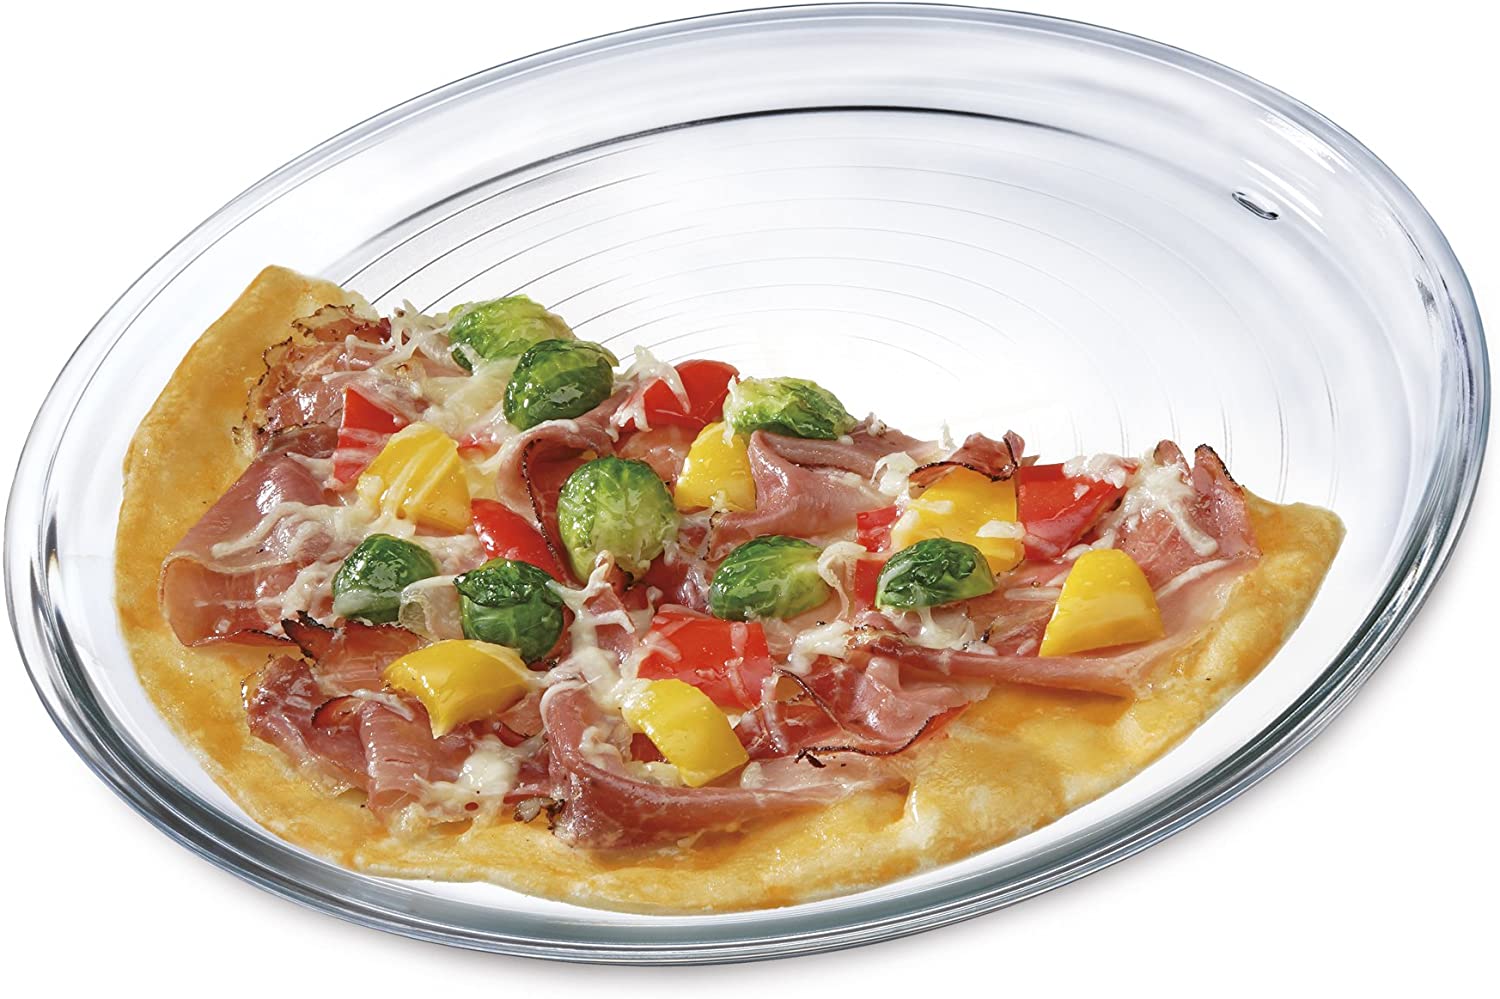 Bohemia Cristal Simax 093 006 152 Clear Heat Resistant Borosilicate Glass Pizza Plates Glass Diameter 32 cm Pizza Plate 32 x 32 x 1.5 cm